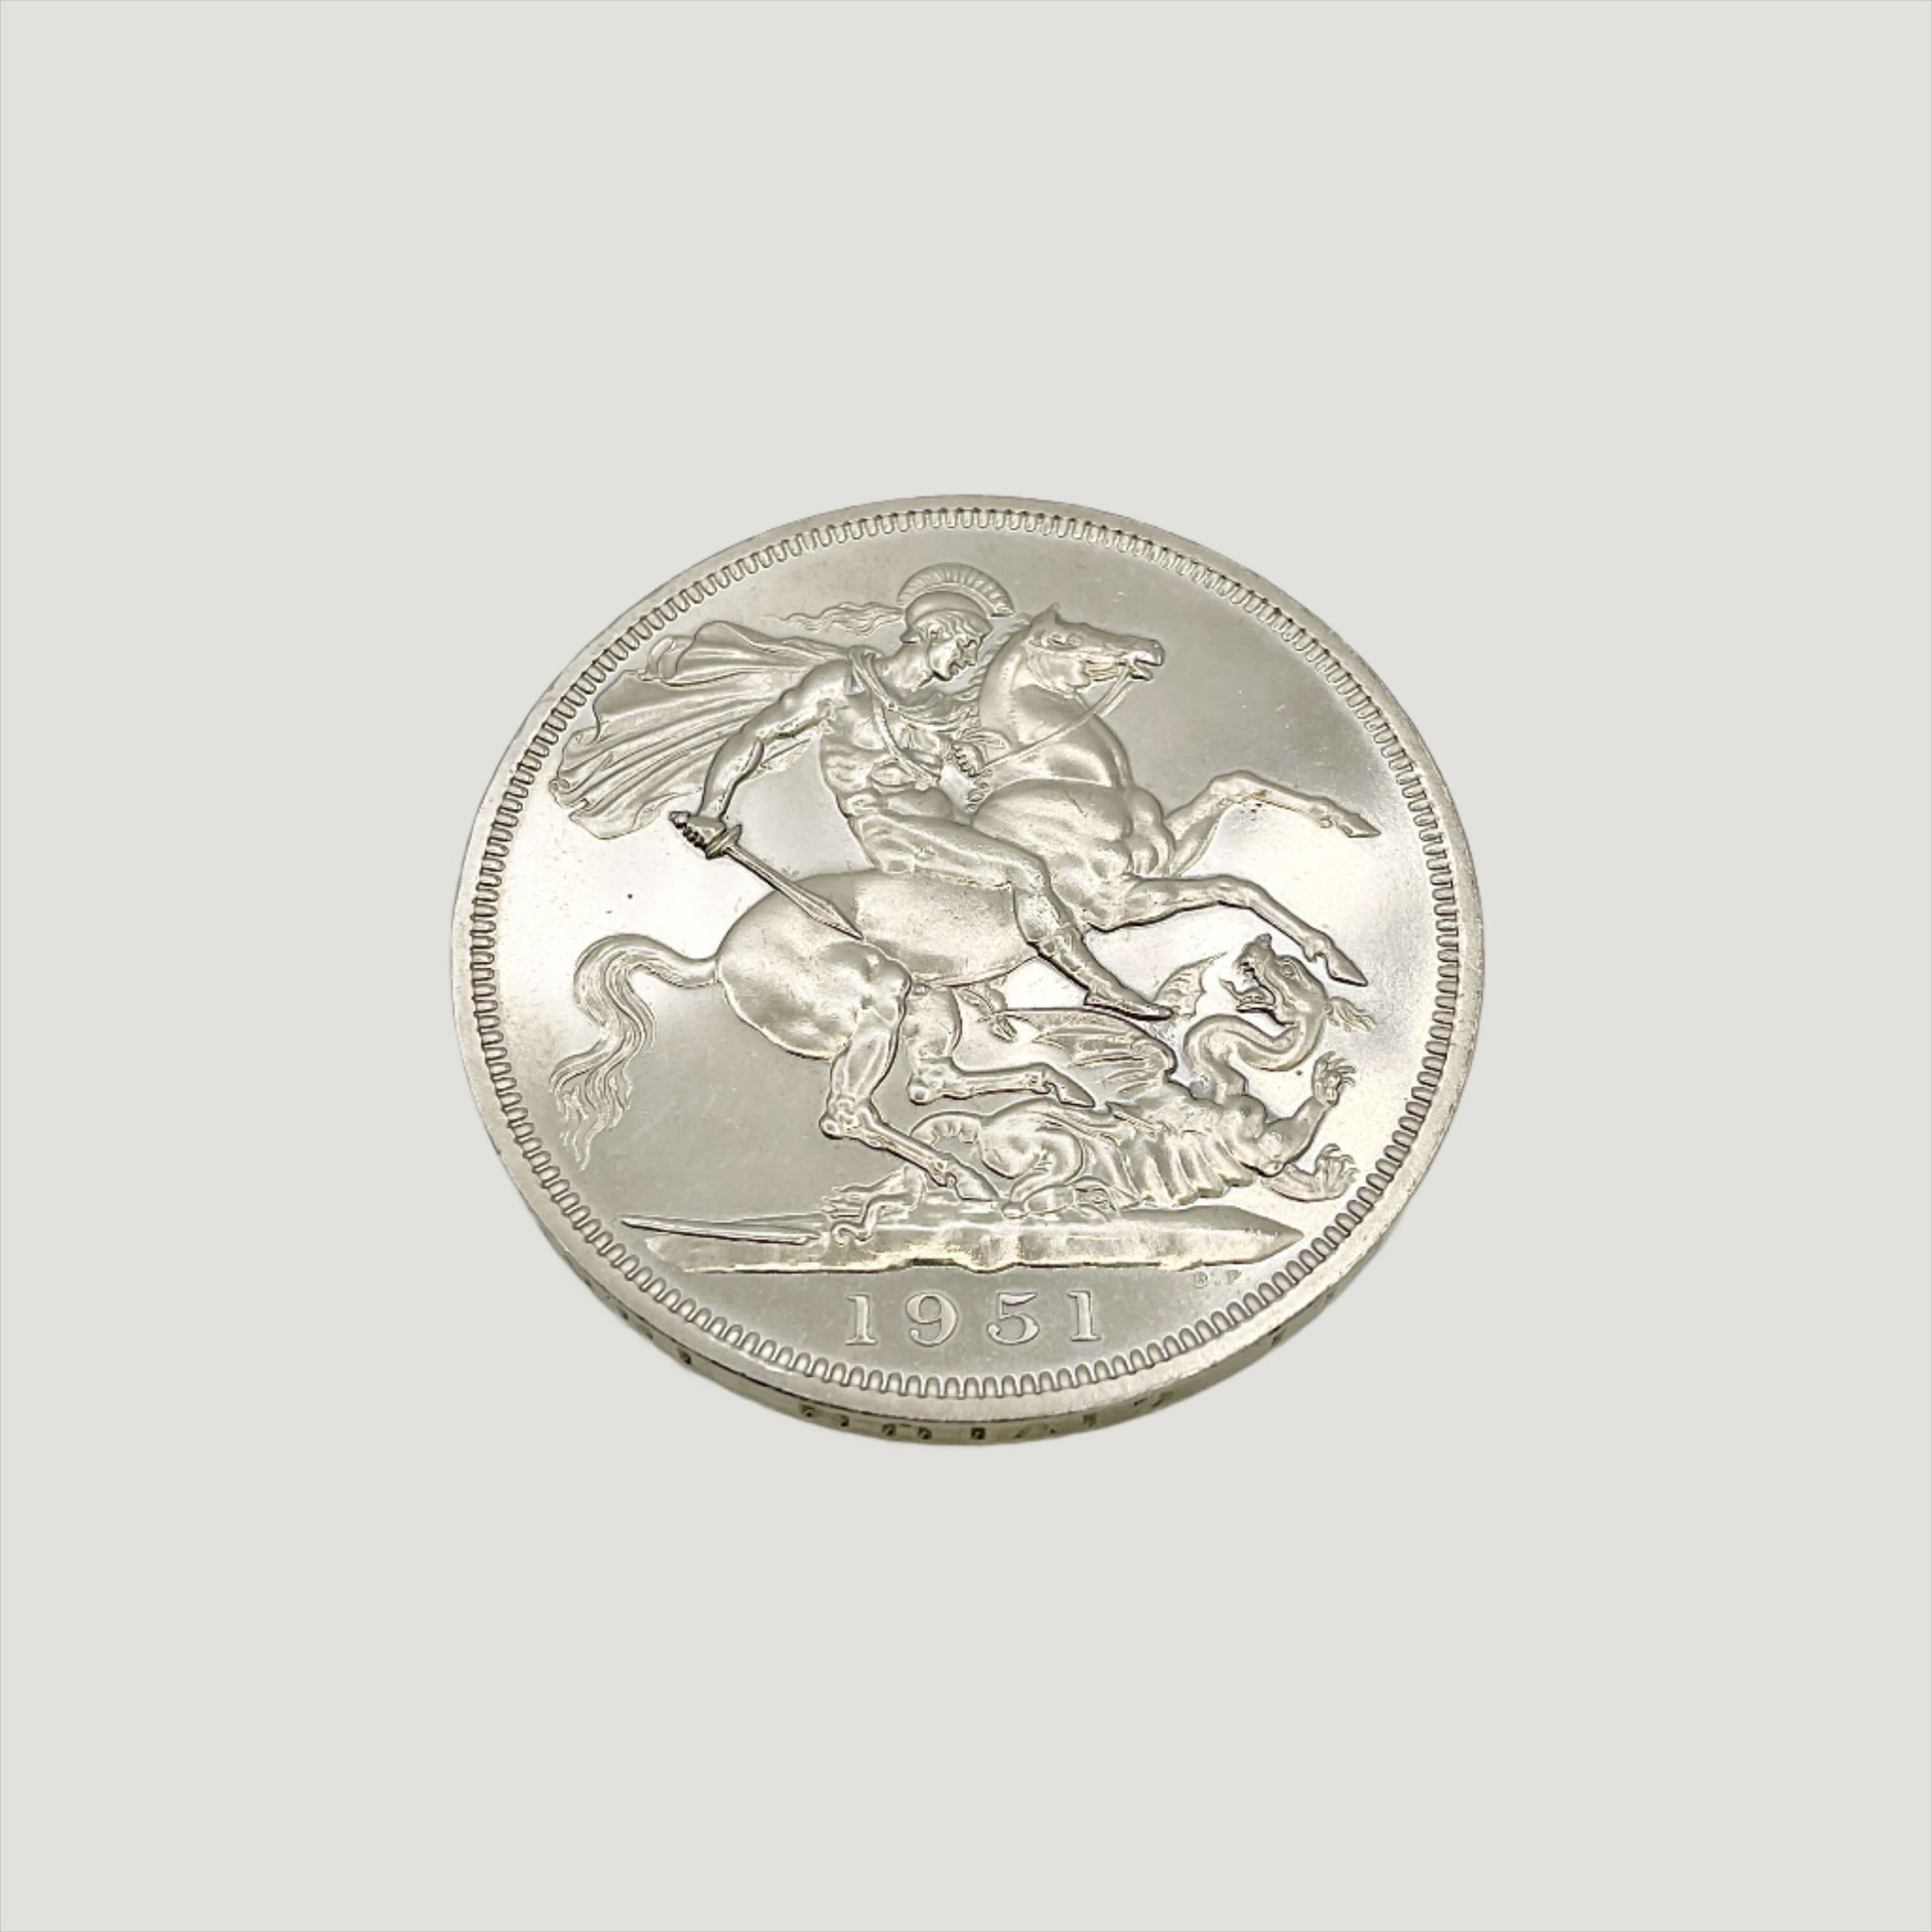 Festival of Britain coin